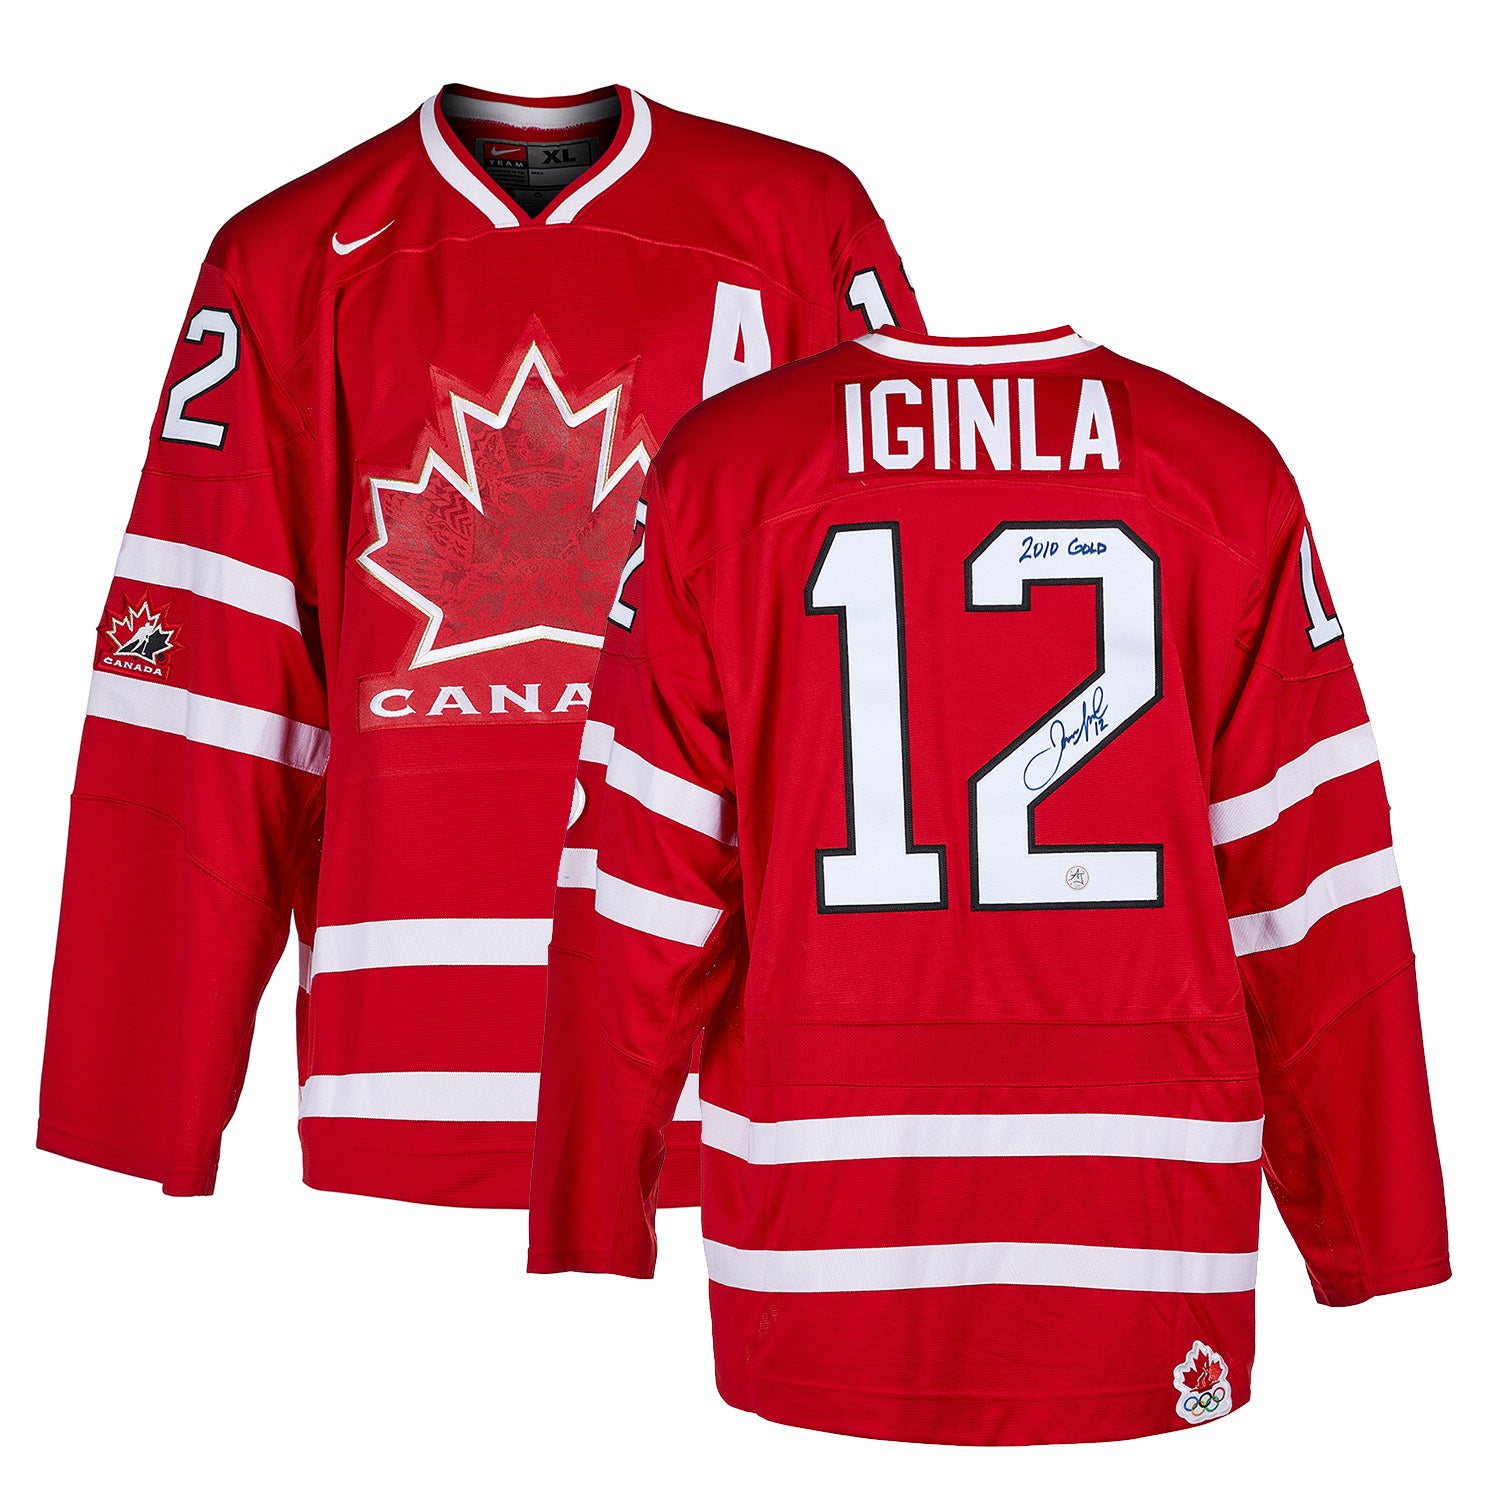 Jarome Iginla Team Canada Signed & Inscribed 2010 Gold Nike Jersey